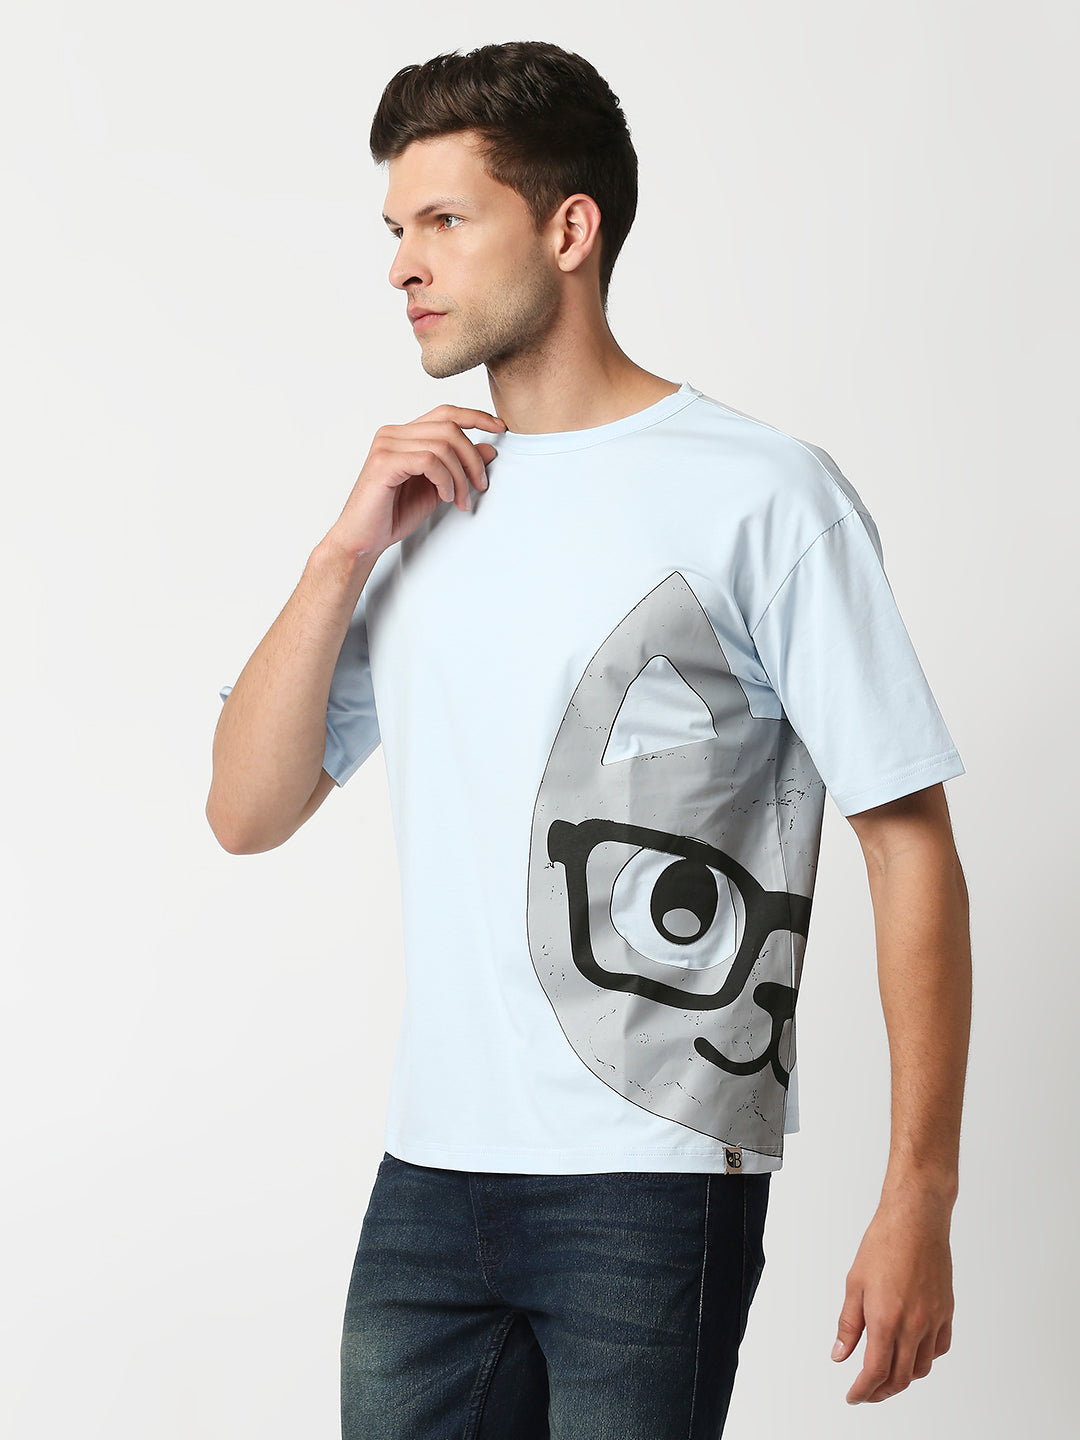 Buy Men's Over Size Fit Sky Blue Color Baggy T-Shirt